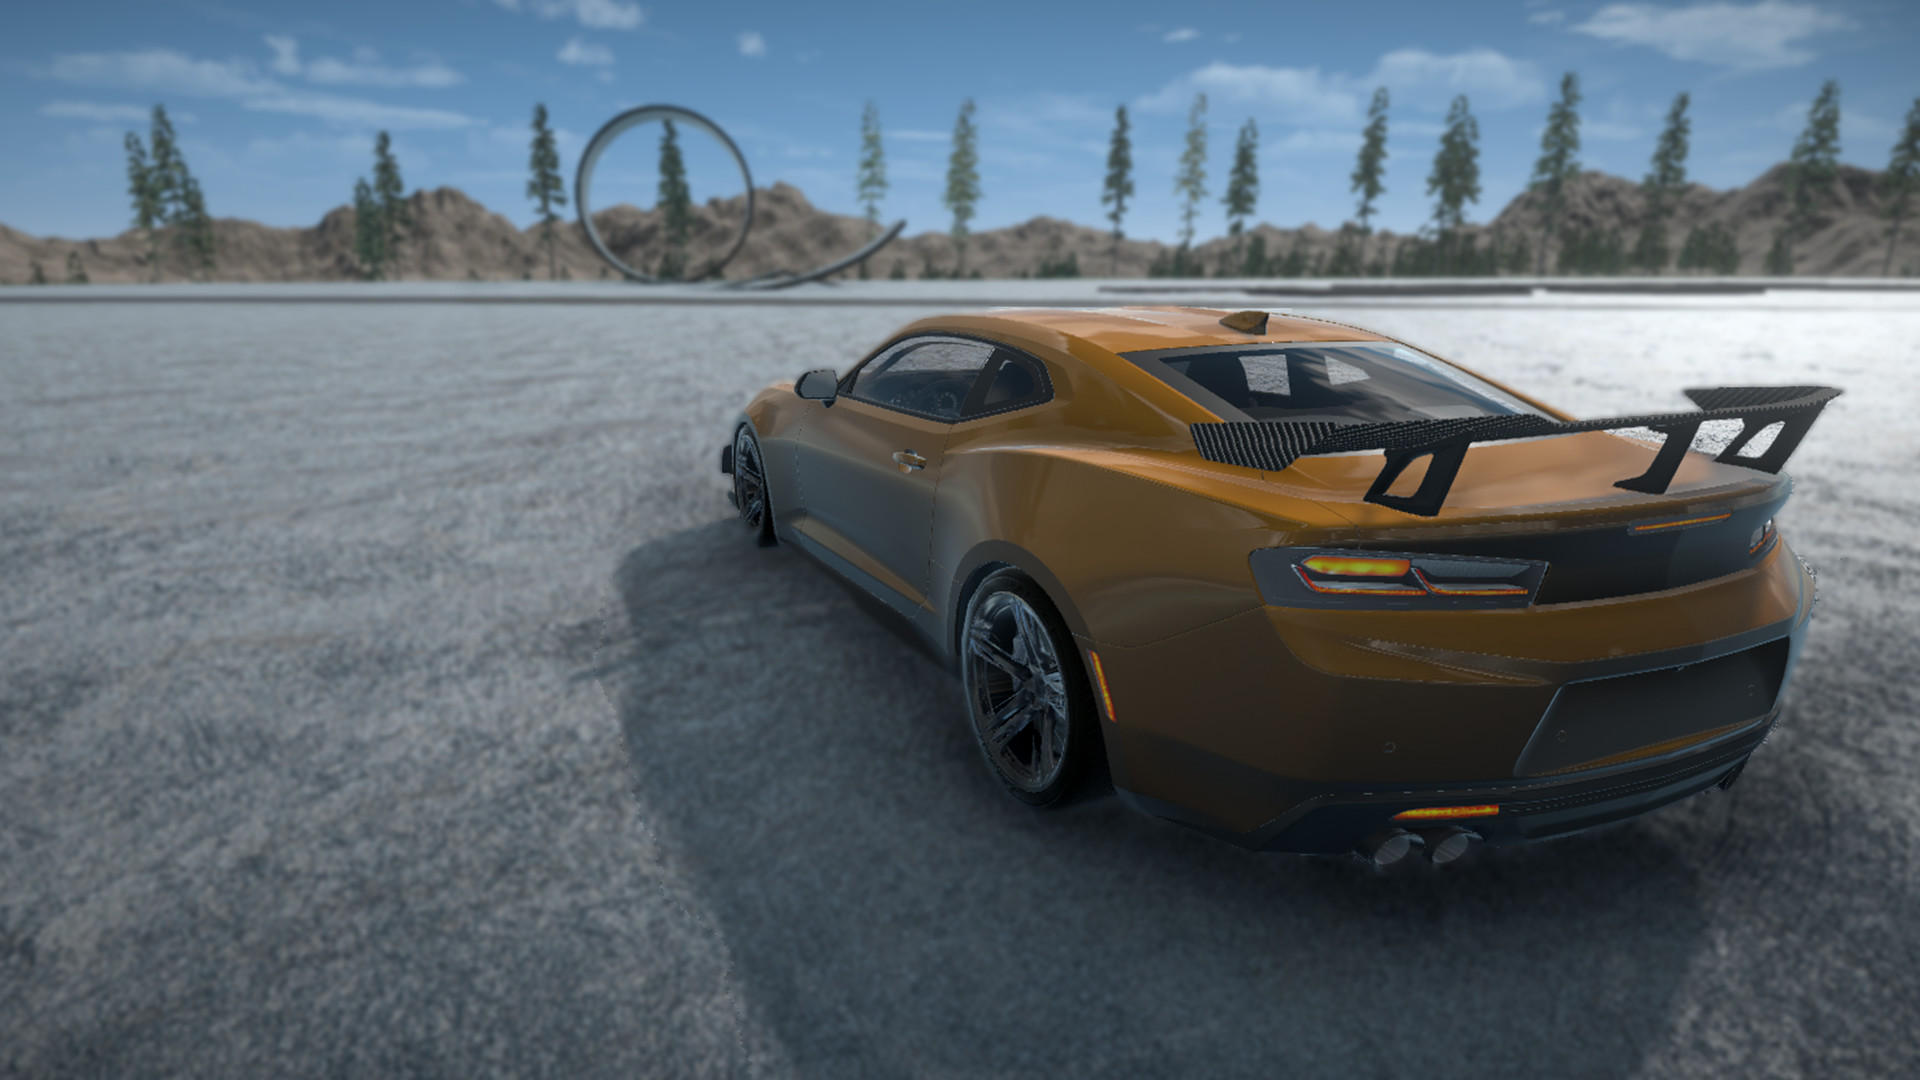 Car Physics Simulator - Sports Car #2 Featured Screenshot #1